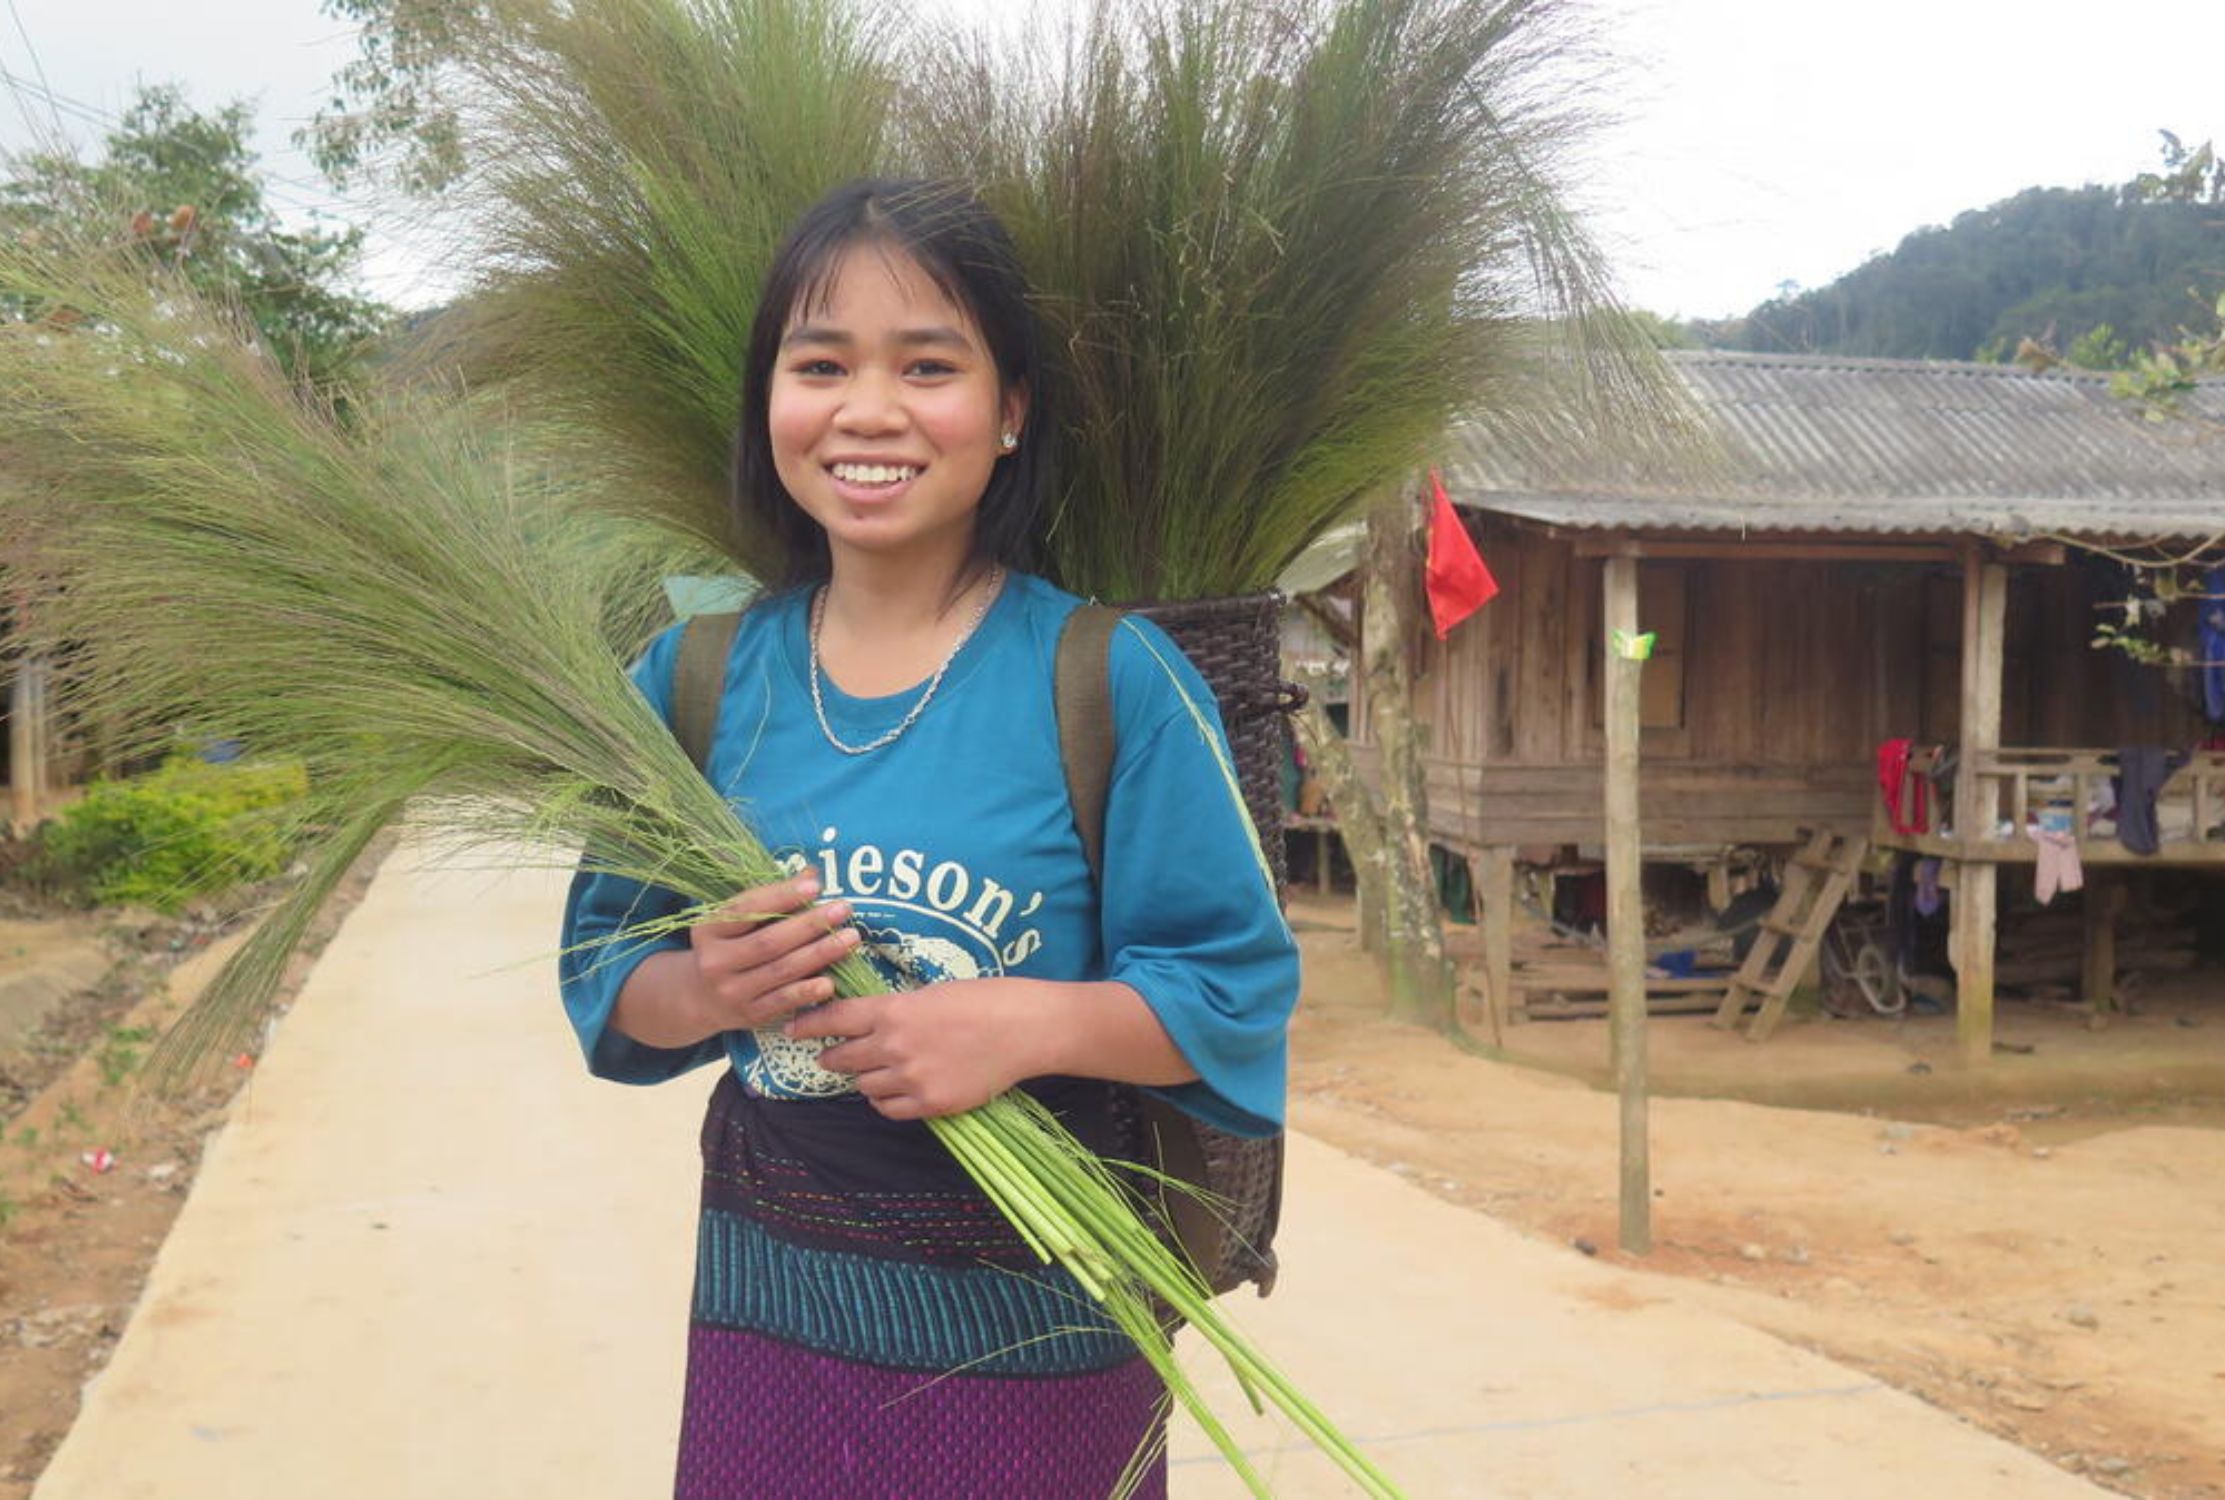 Vietnamese girl smiling and holding grass harvest